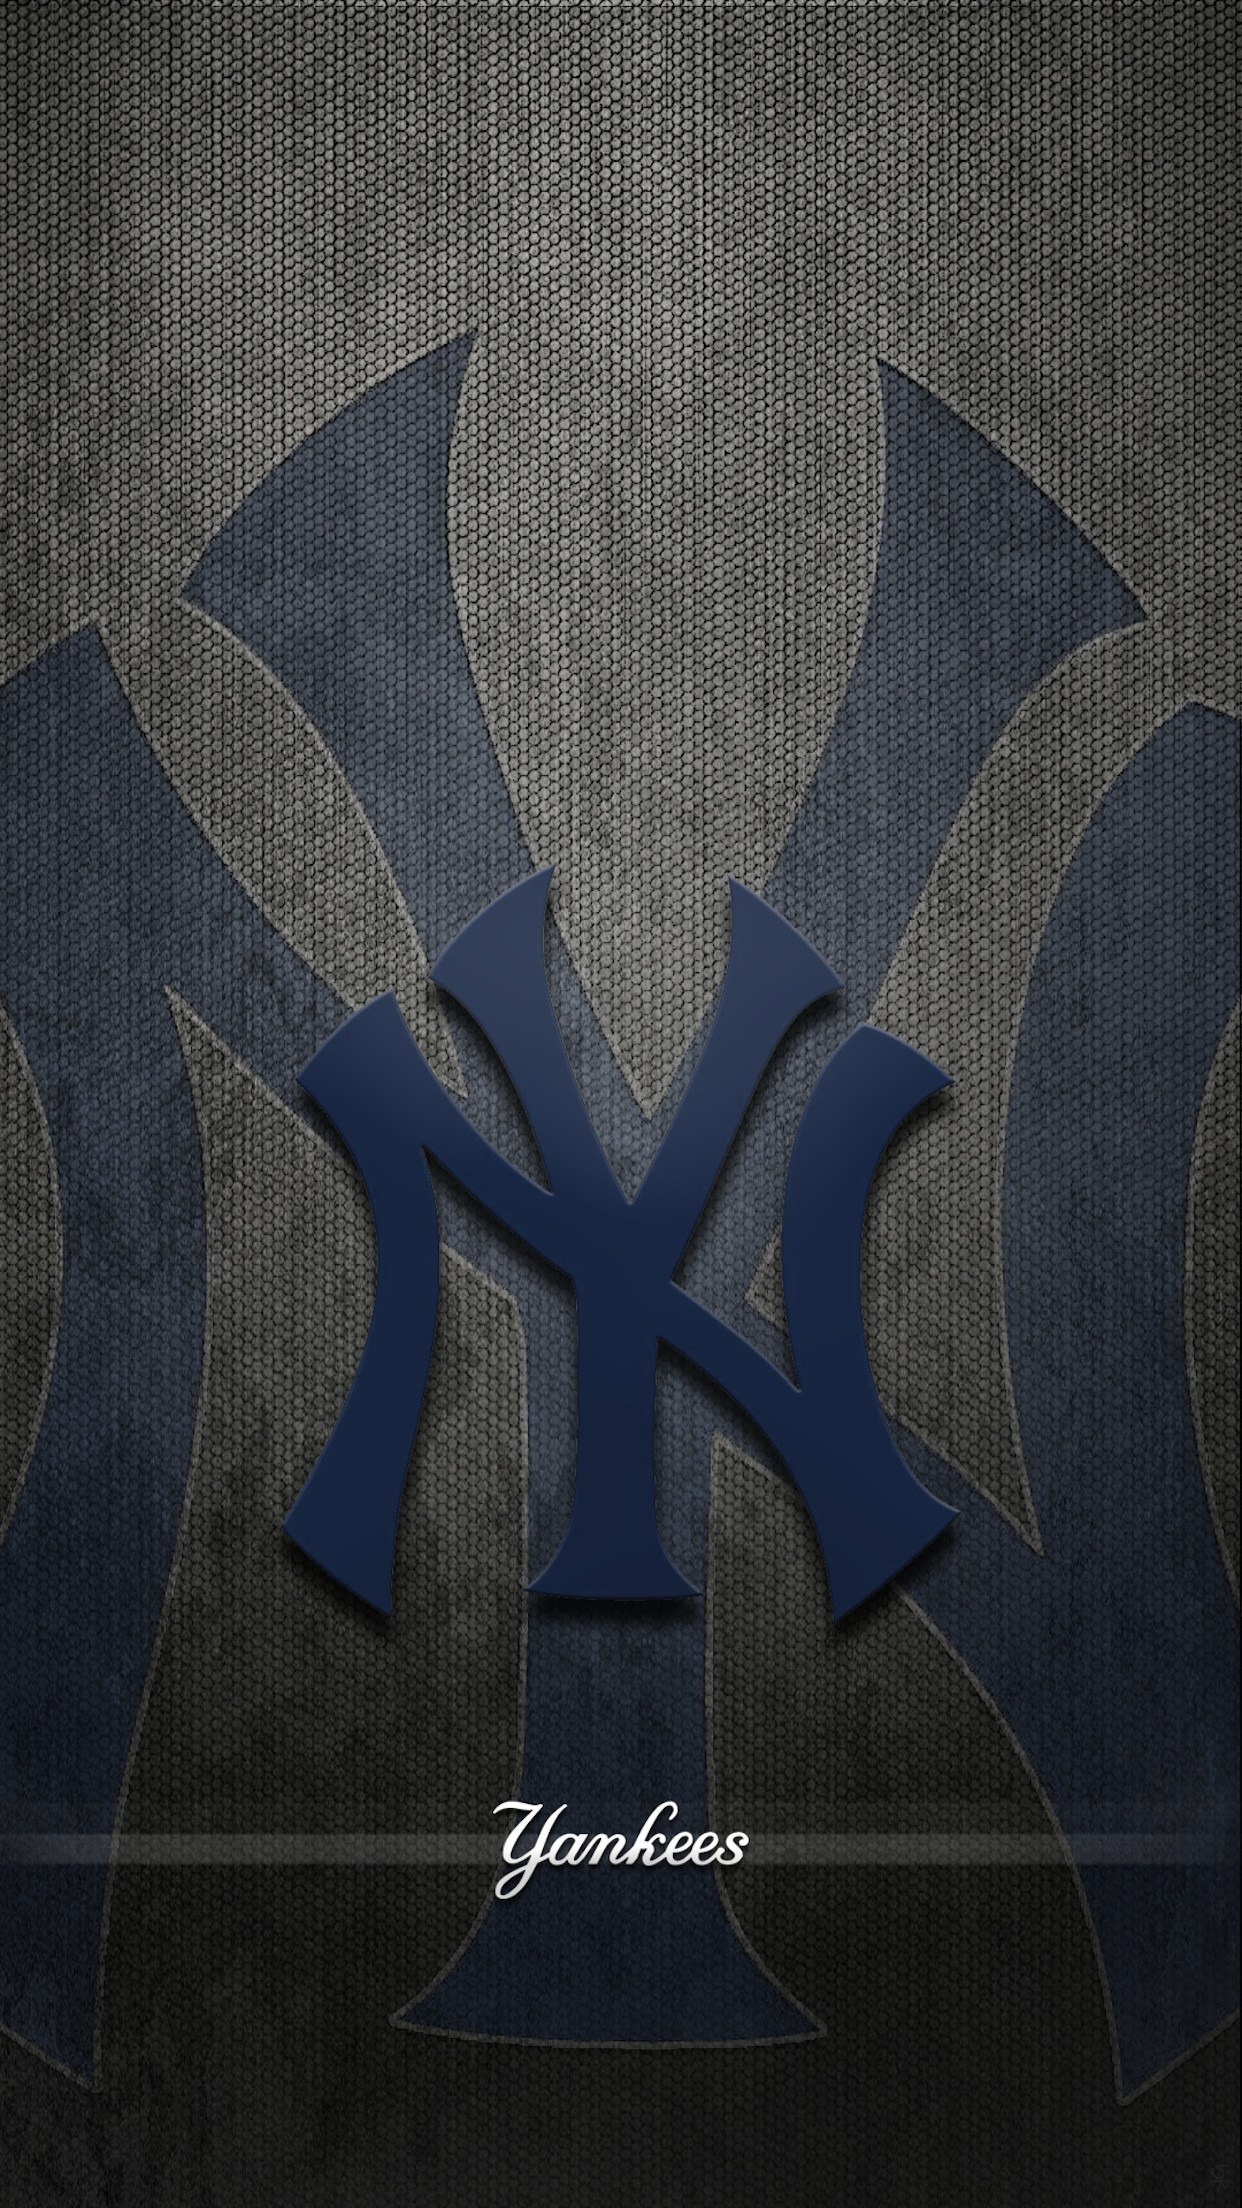 1242x2208 New York Yankees Wallpaper iPhone - Beautiful New York Yankees Wallpaper  iPhone, Ny Yankees Logo